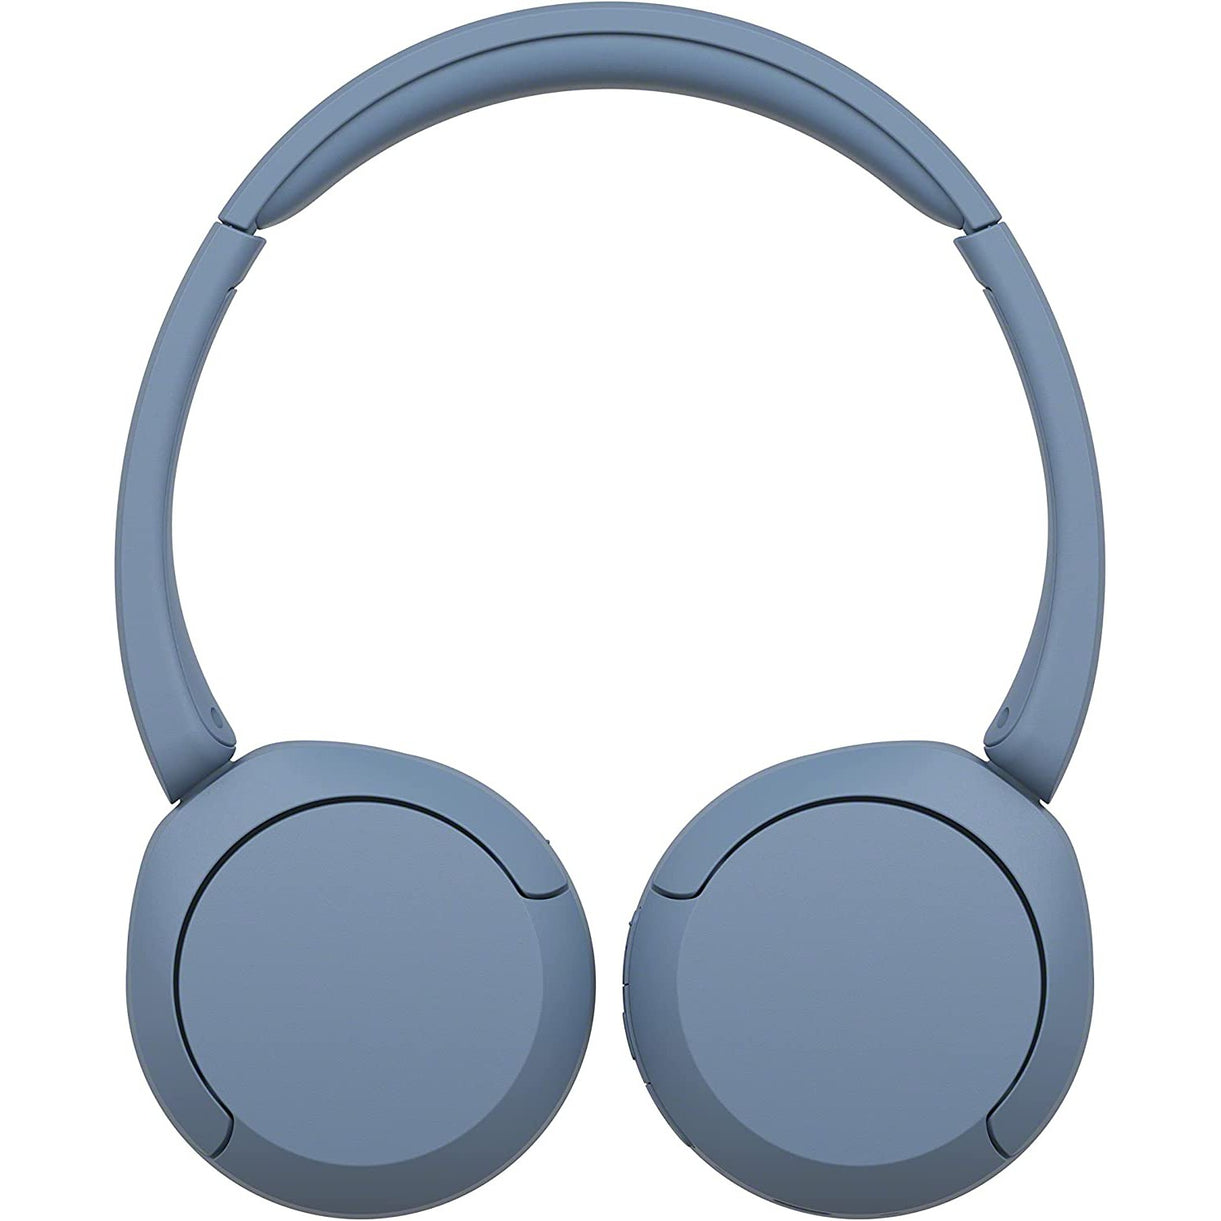 Sony WH-CH520 Wireless Bluetooth Headphones - Refurbished Pristine